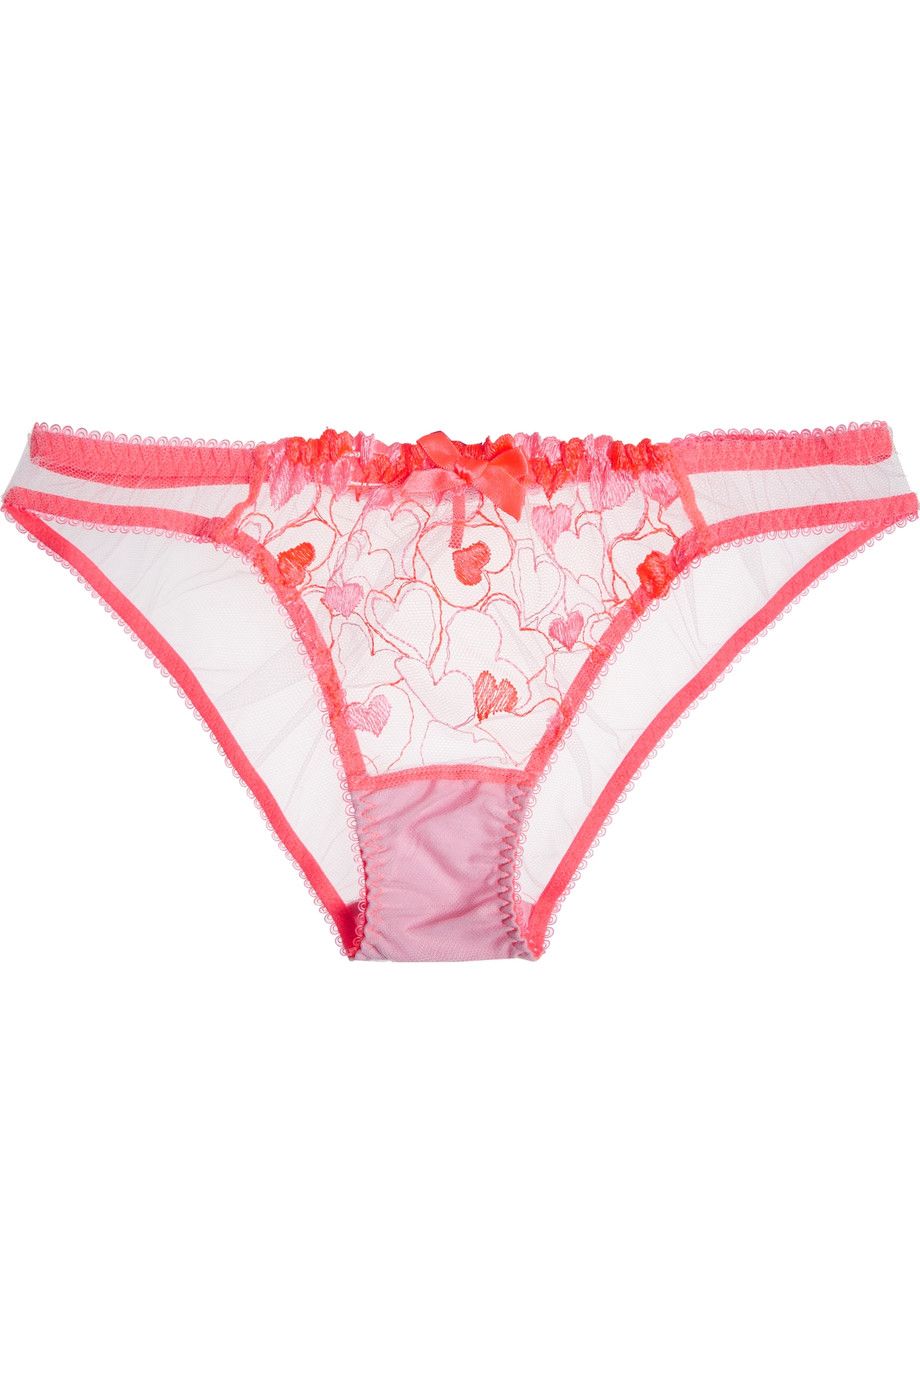 Red, Undergarment, Pink, Swimsuit bottom, Pattern, Lingerie, Carmine, Undergarment, Maroon, Briefs, 